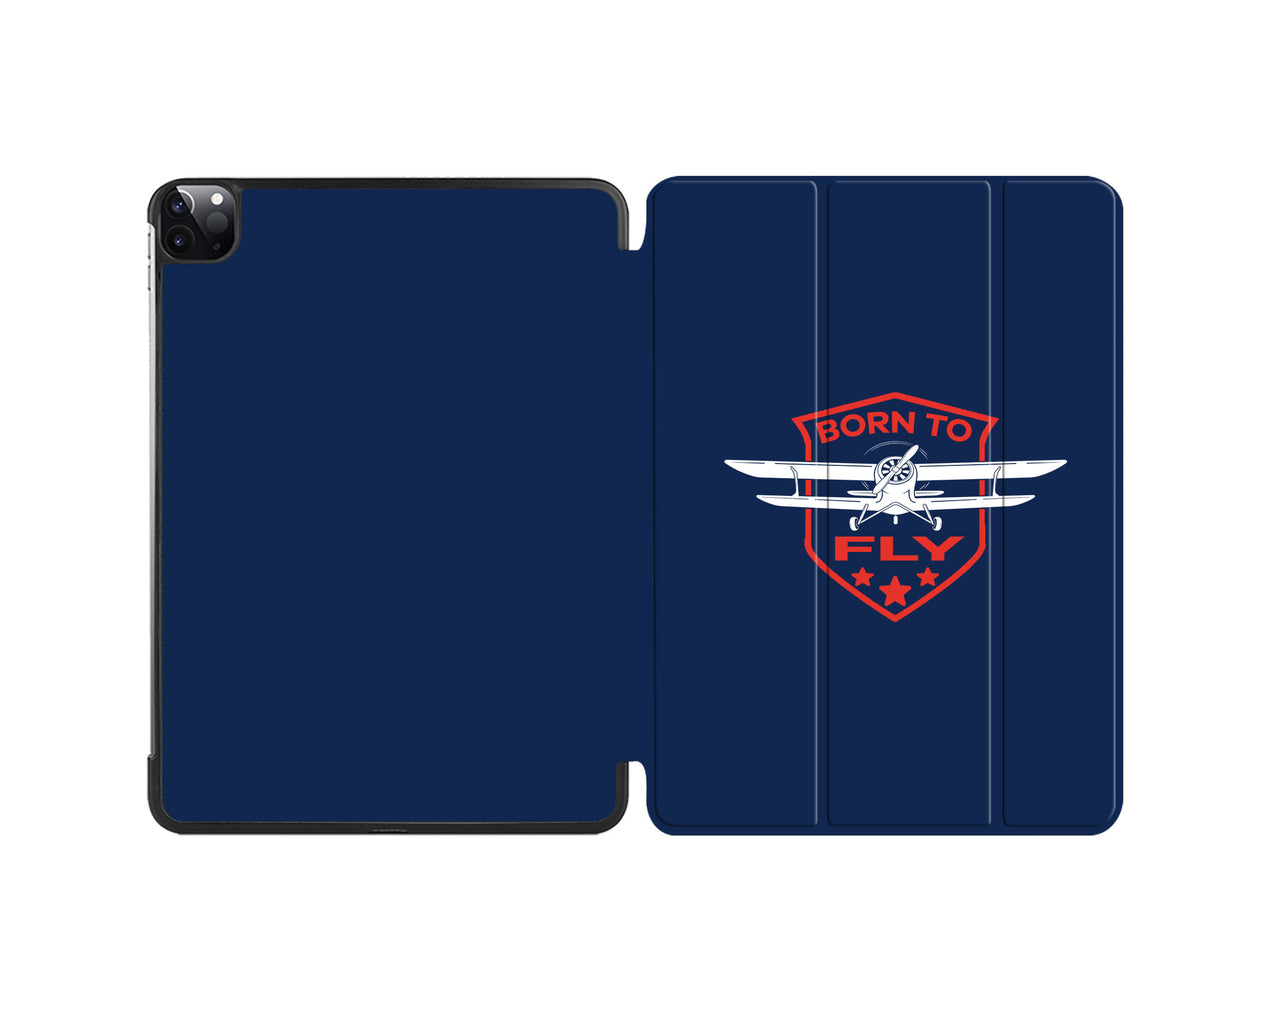 Super Born To Fly Designed iPad Cases